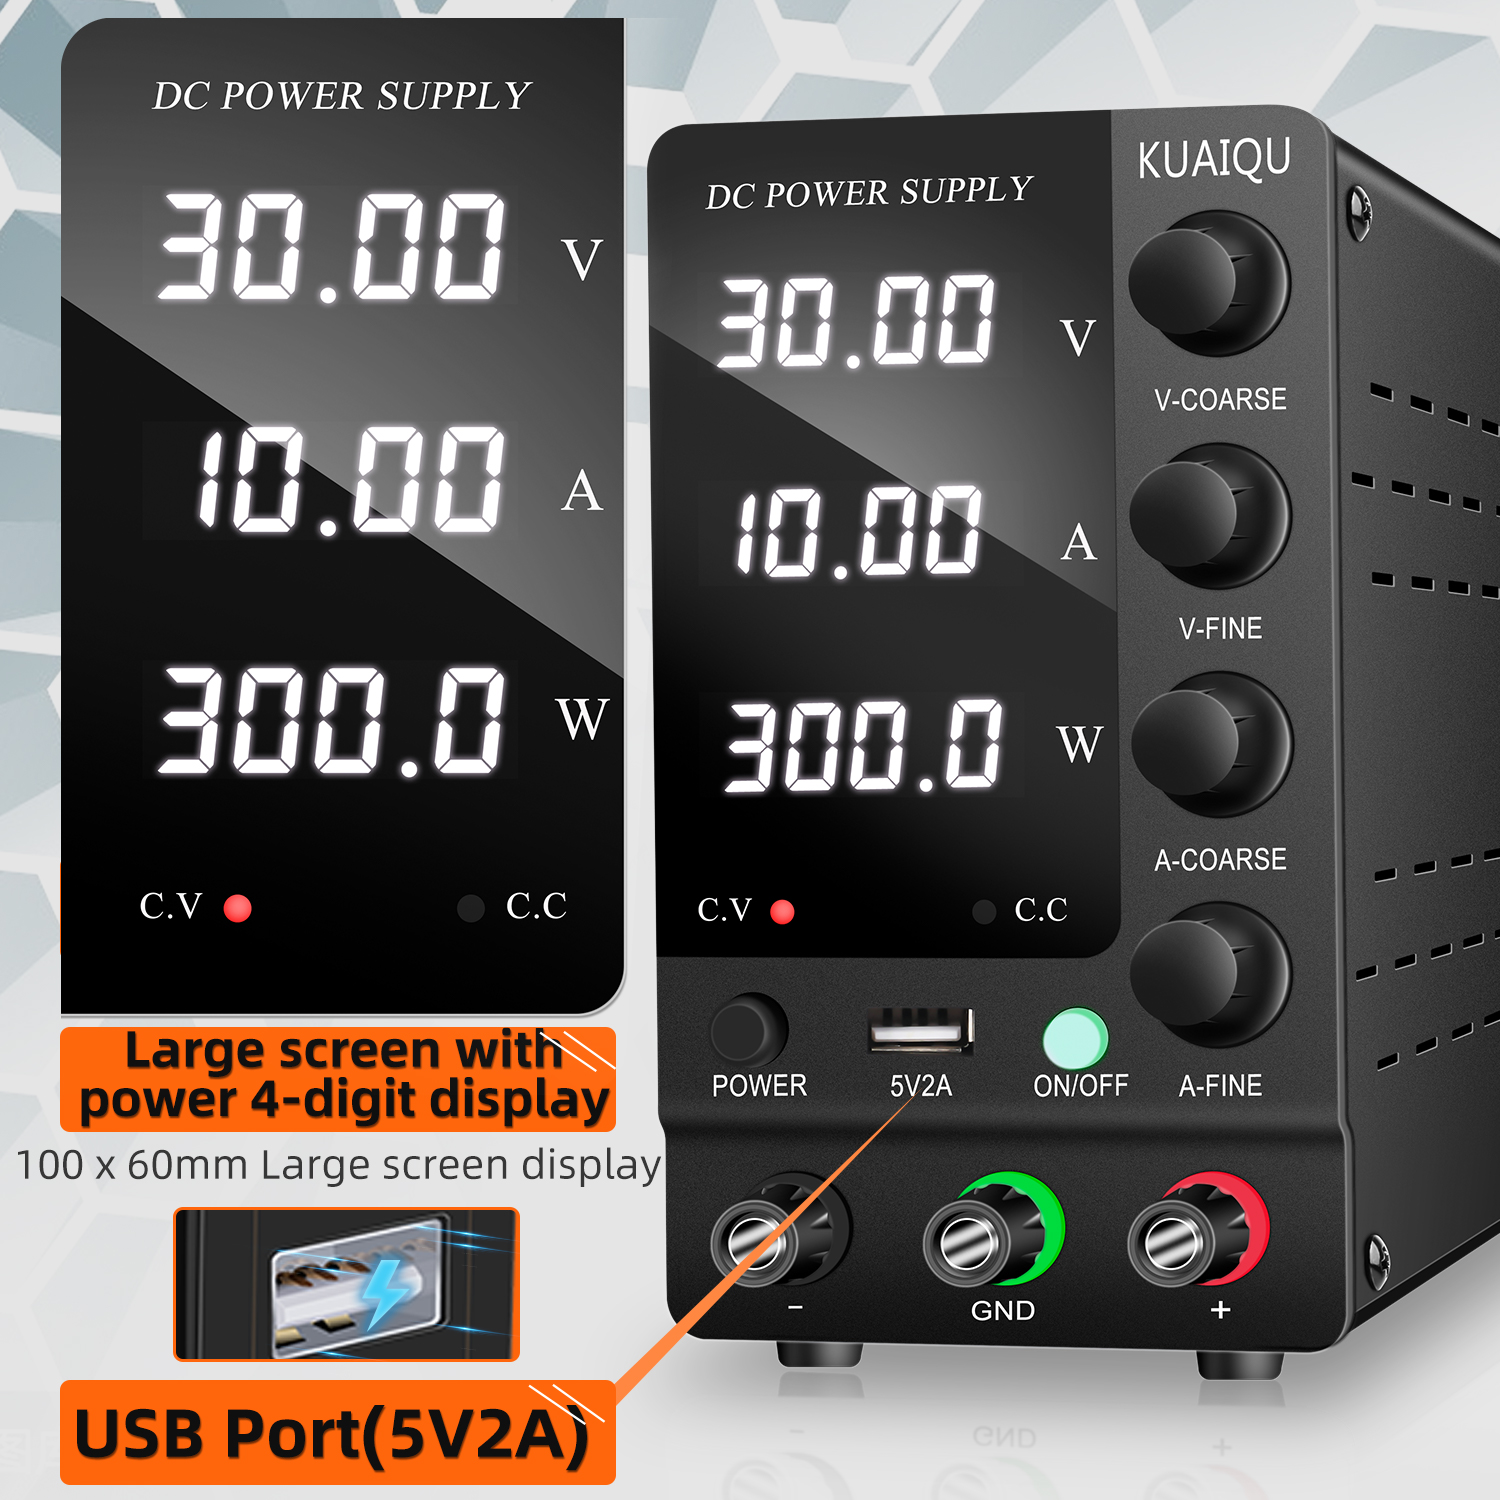 KUAIQU-SPS-C3010-USB-Adjustable-DC-Power-Supply-30V-10A-Laboratory-Lab-Bench-Source-Digital-Voltage--1871078-6